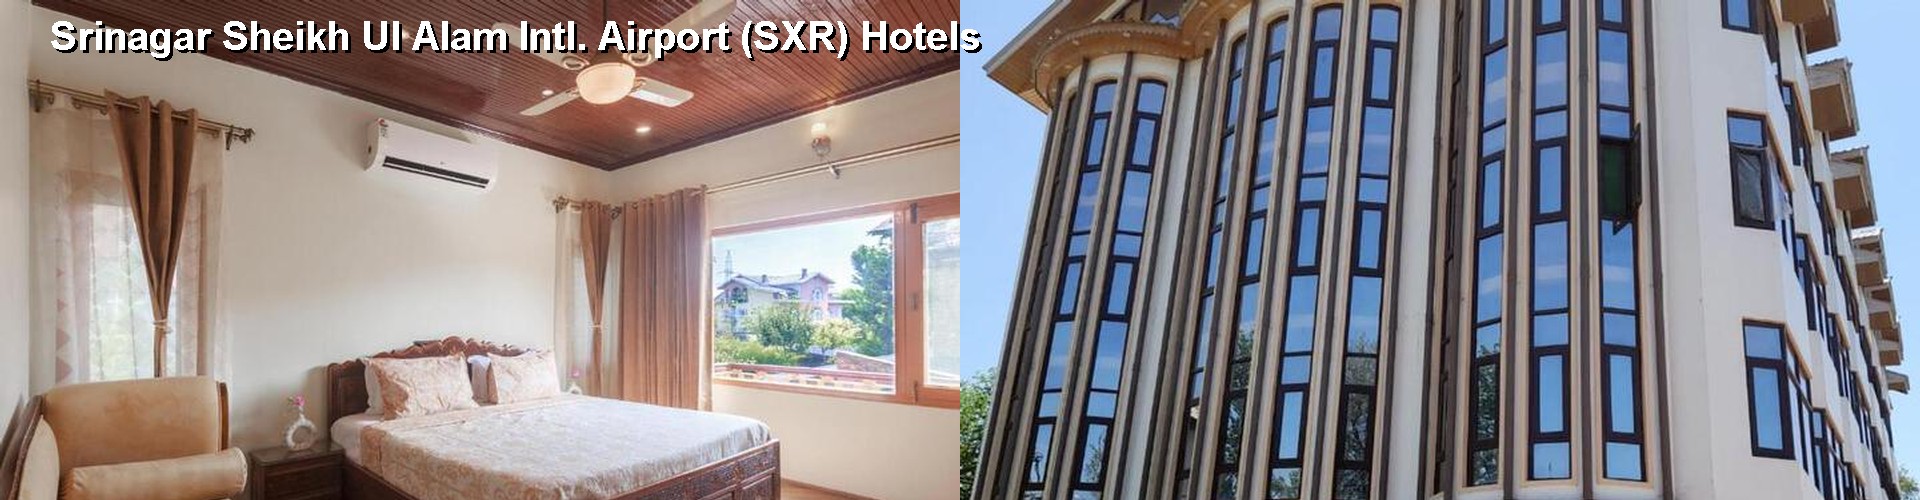 5 Best Hotels near Srinagar Sheikh Ul Alam Intl. Airport (SXR)